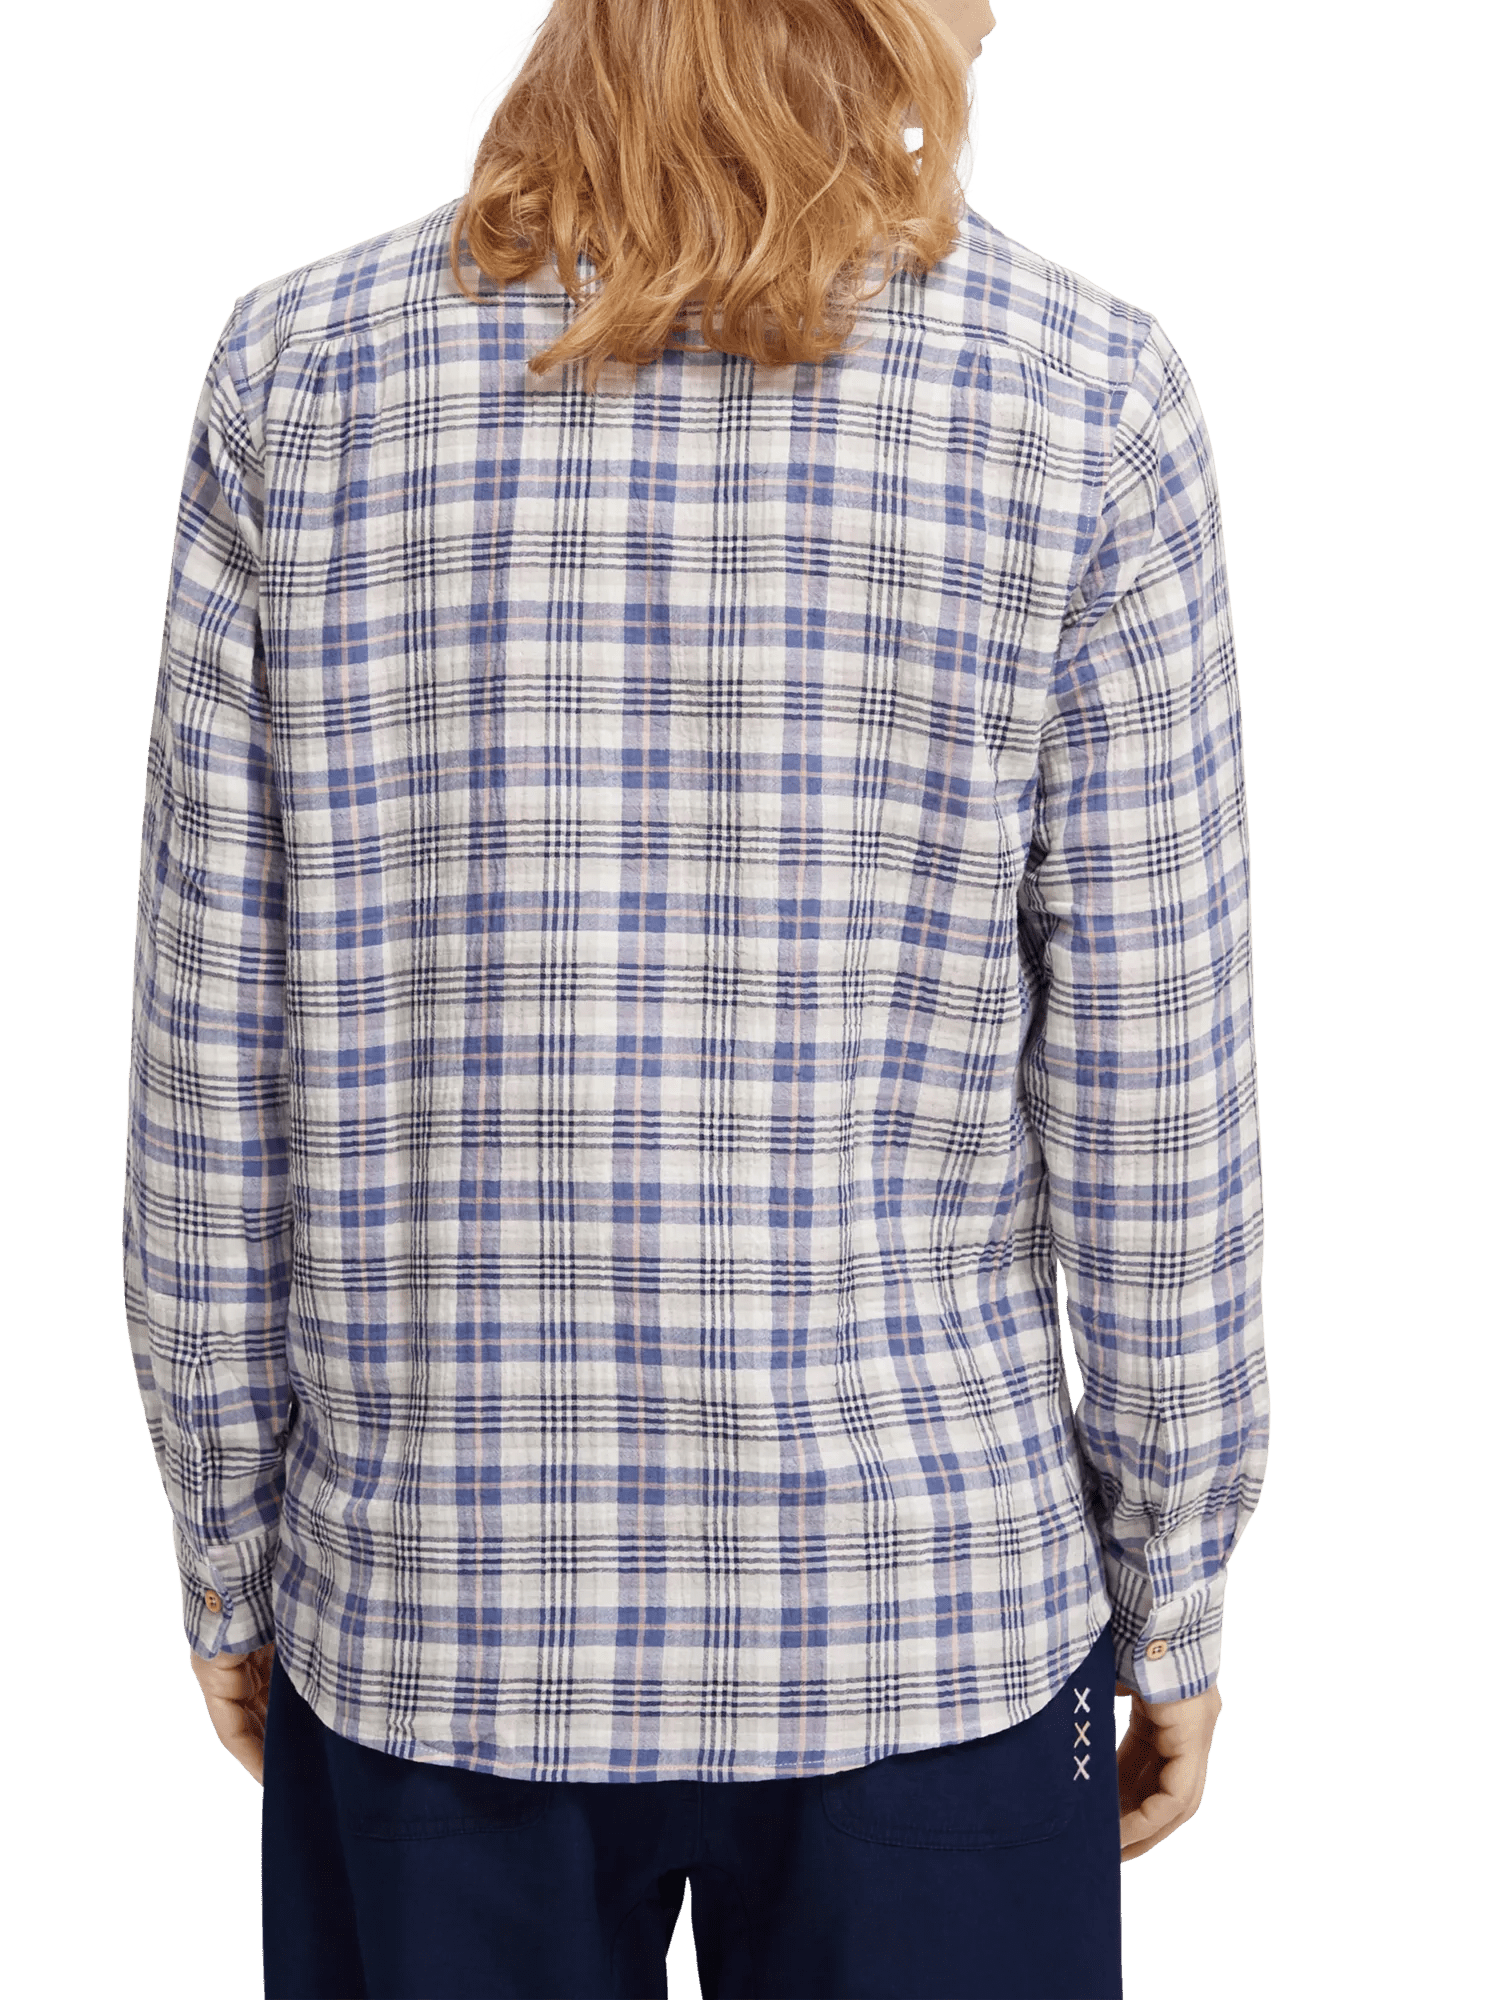 Scotch & Soda Bonded long sleeve shirt in prints and checks NHD-BCK